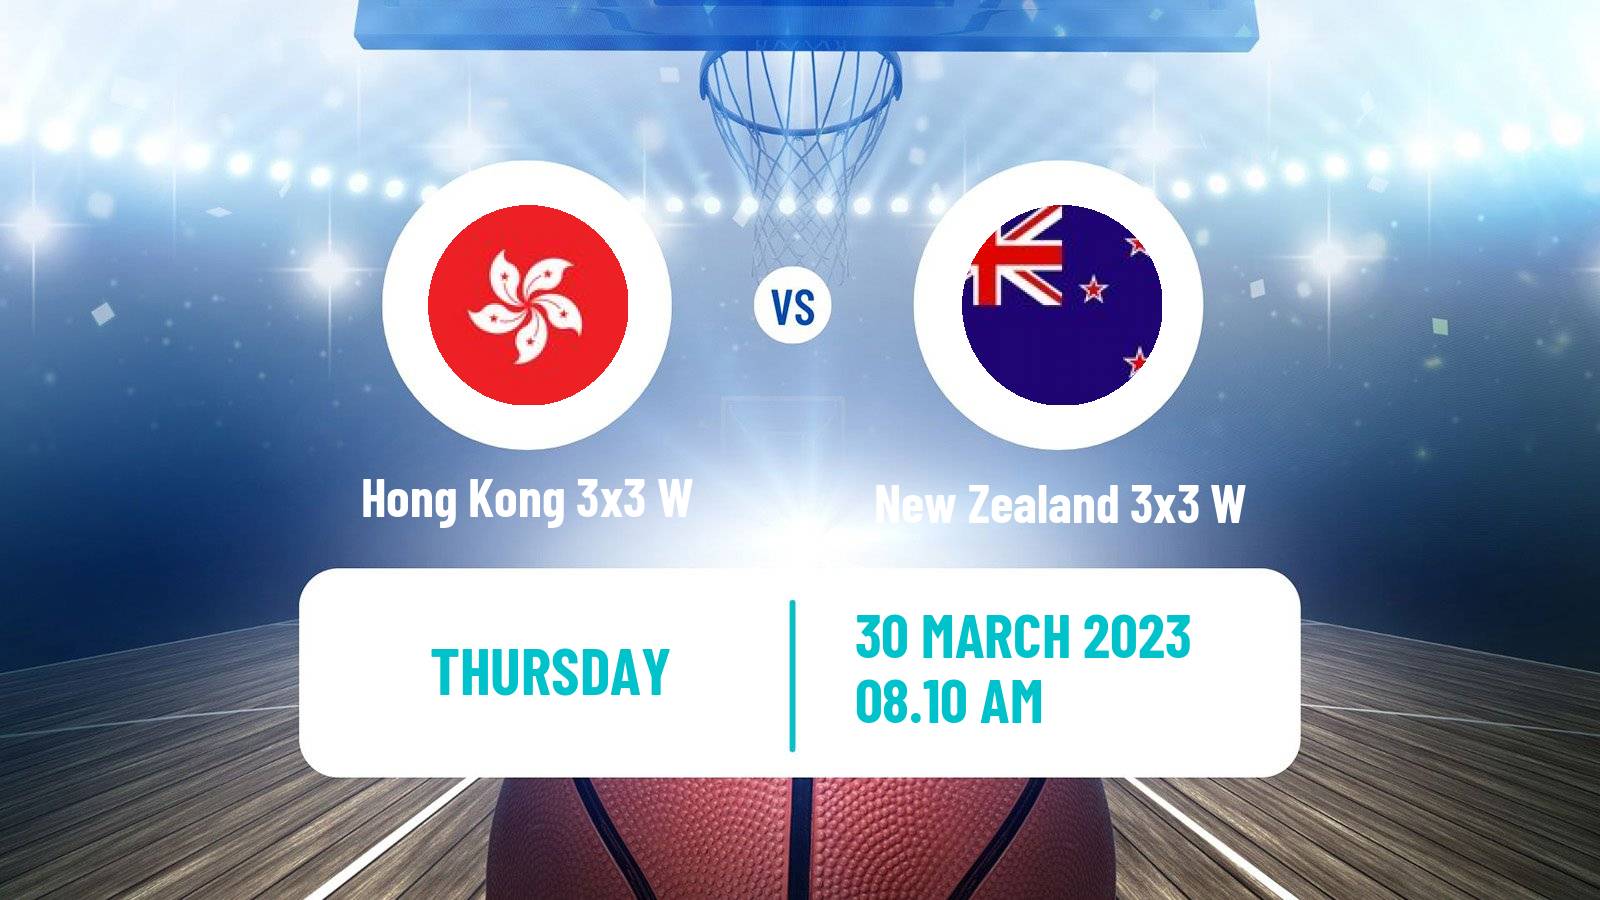 Basketball Asia Cup 3x3 Women Hong Kong 3x3 W - New Zealand 3x3 W